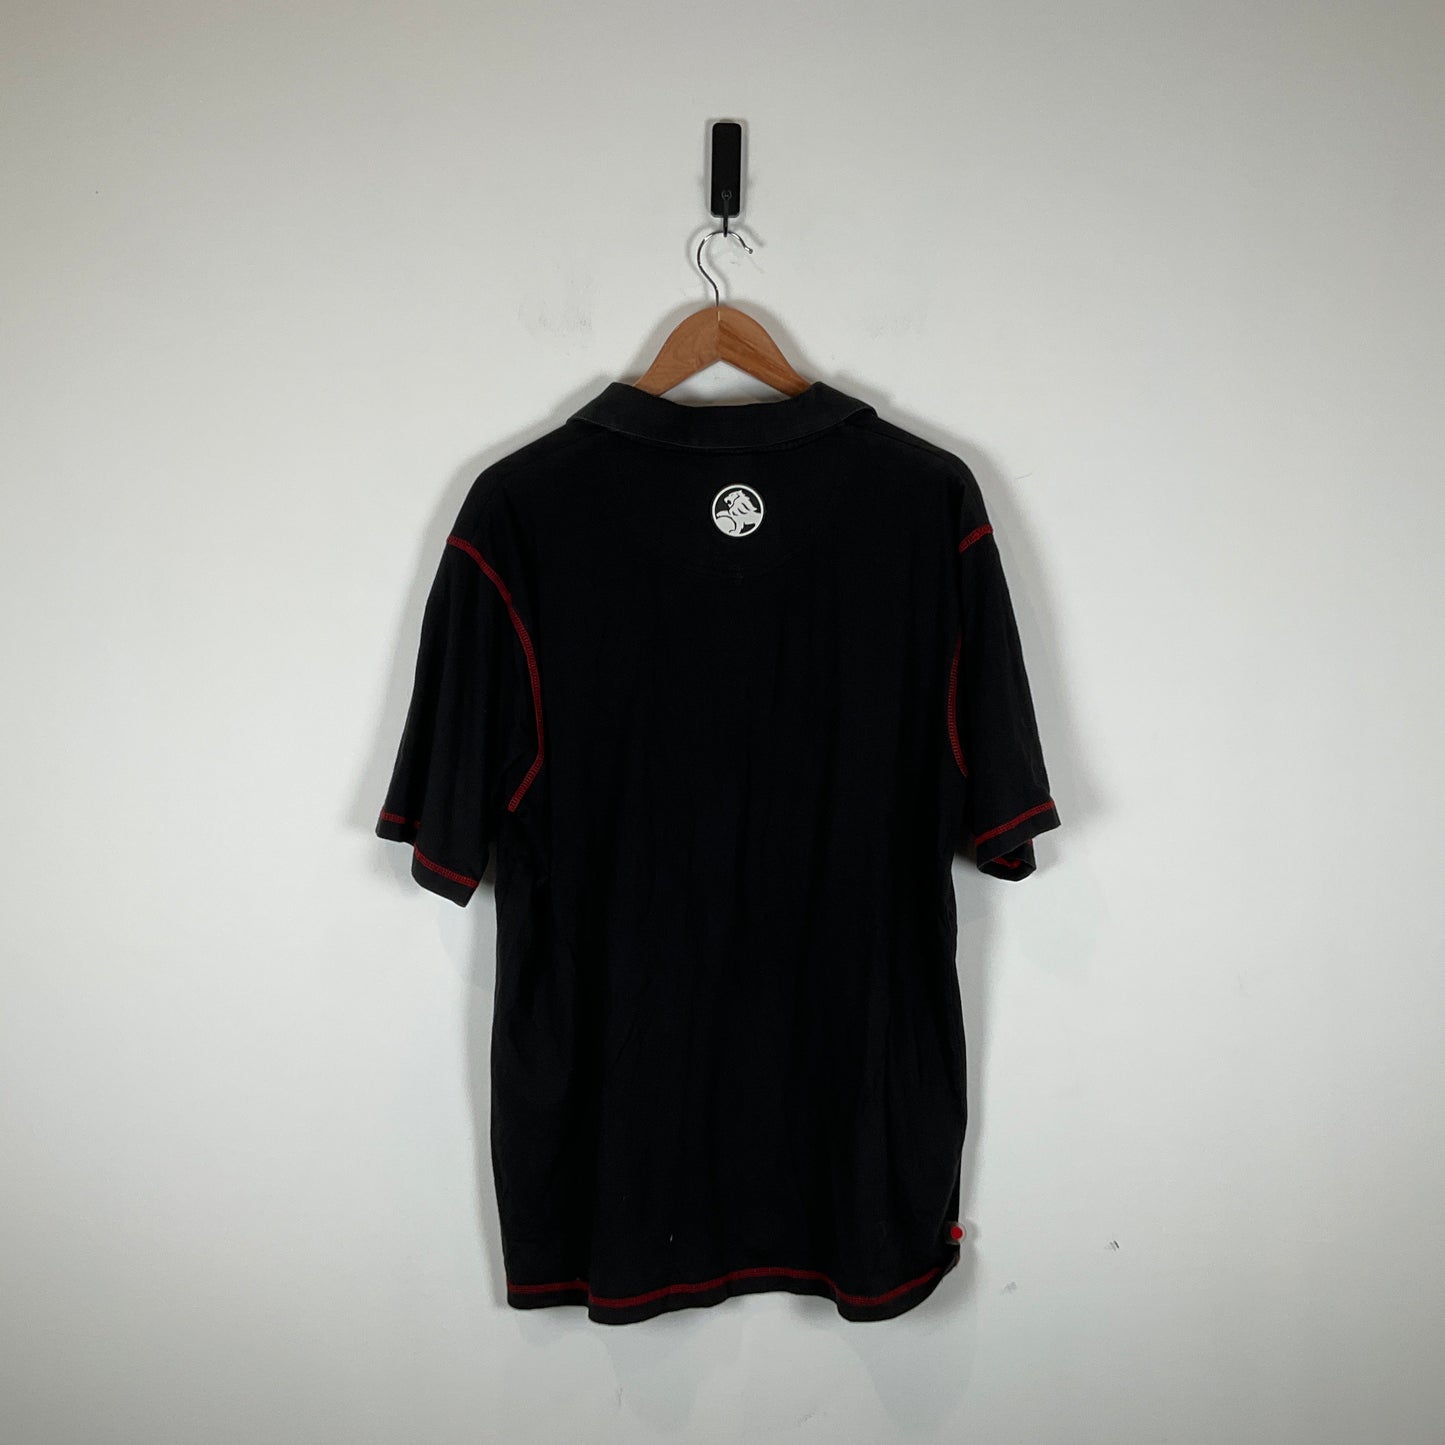 Holden - Black Shirt Shirts & Tops